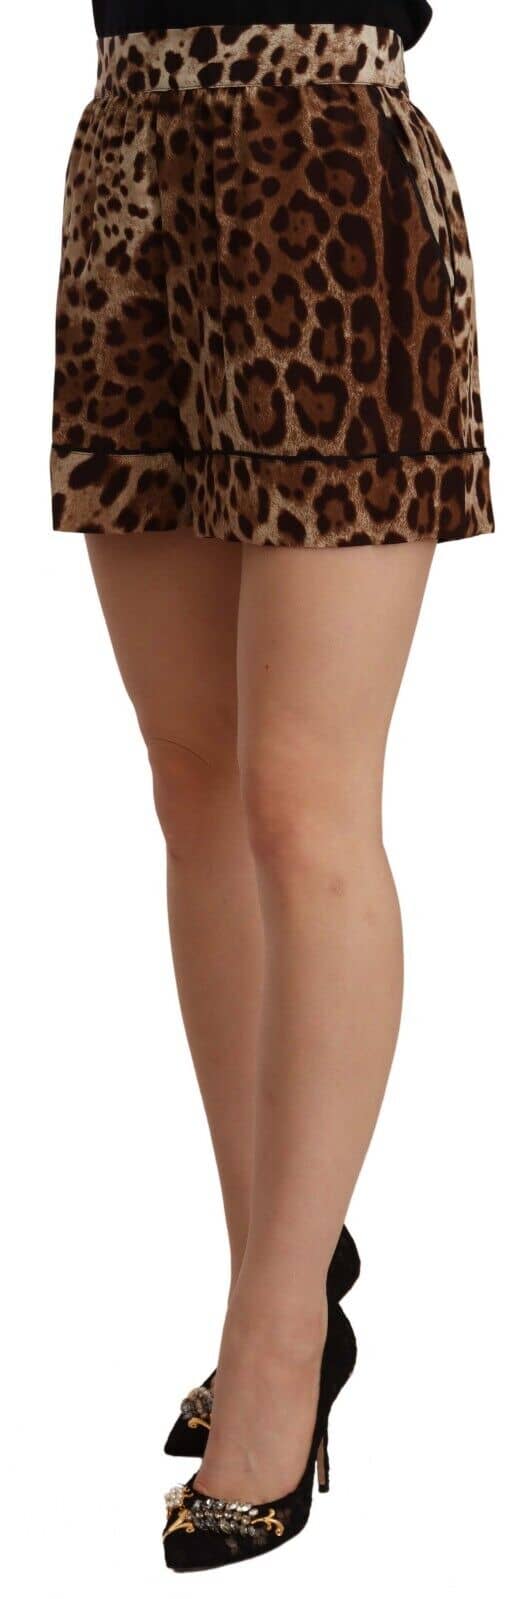 Brown leopard print high waist silk stretch shorts